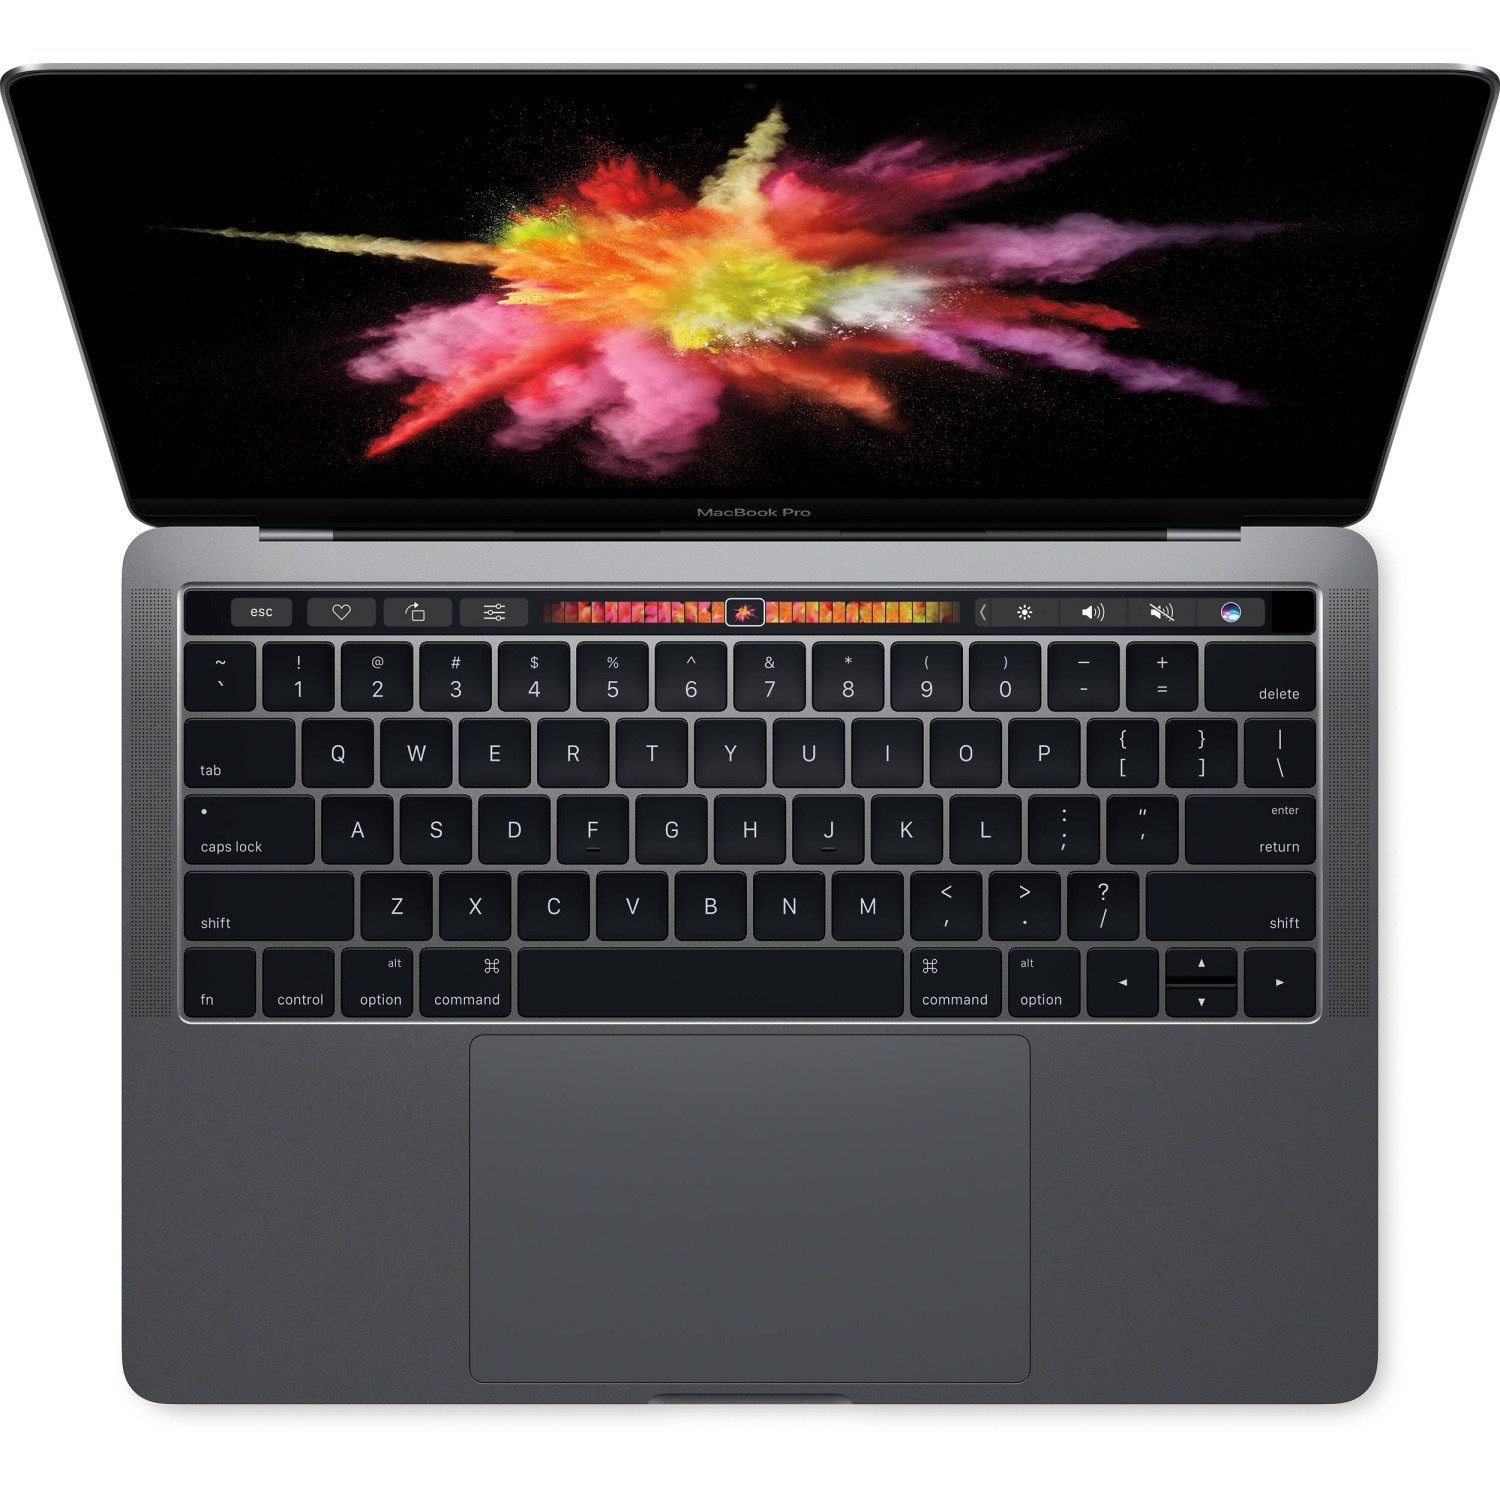 Refurbished (Excellent) - MacBook Pro 13" Retina 2.5GHz i7 16GB / 256GB - Space Gray - 2017 Model - Refurb, Grade A, Excellent, 9/10!